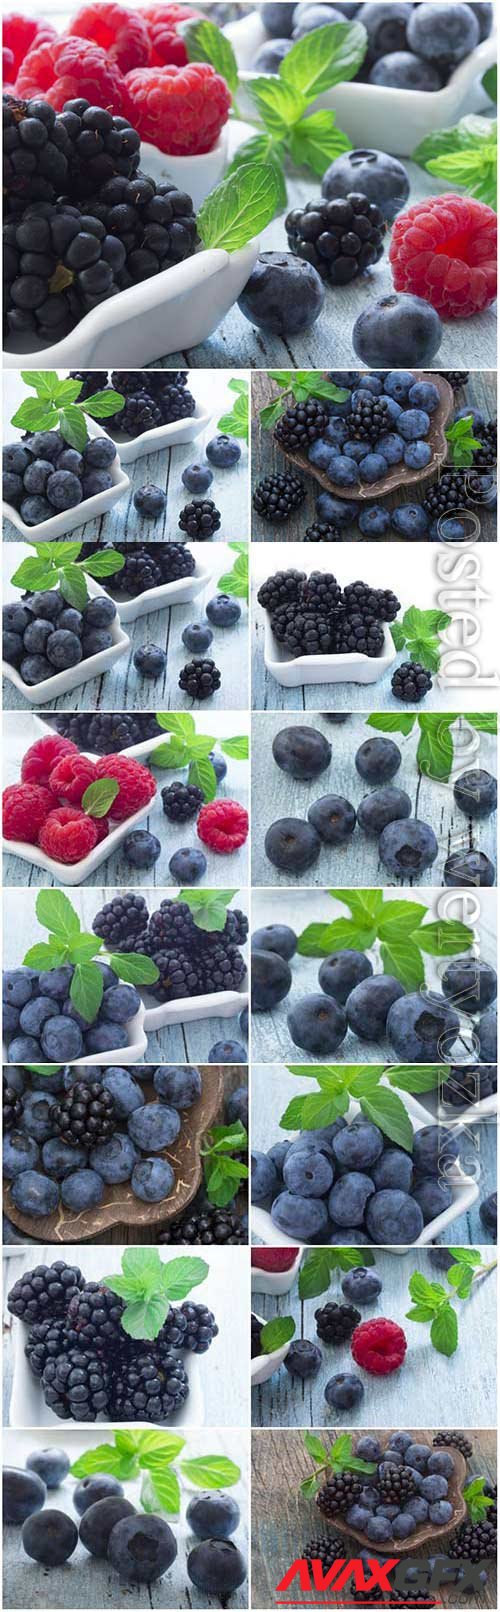 Blueberries raspberries and blackberries stock photo